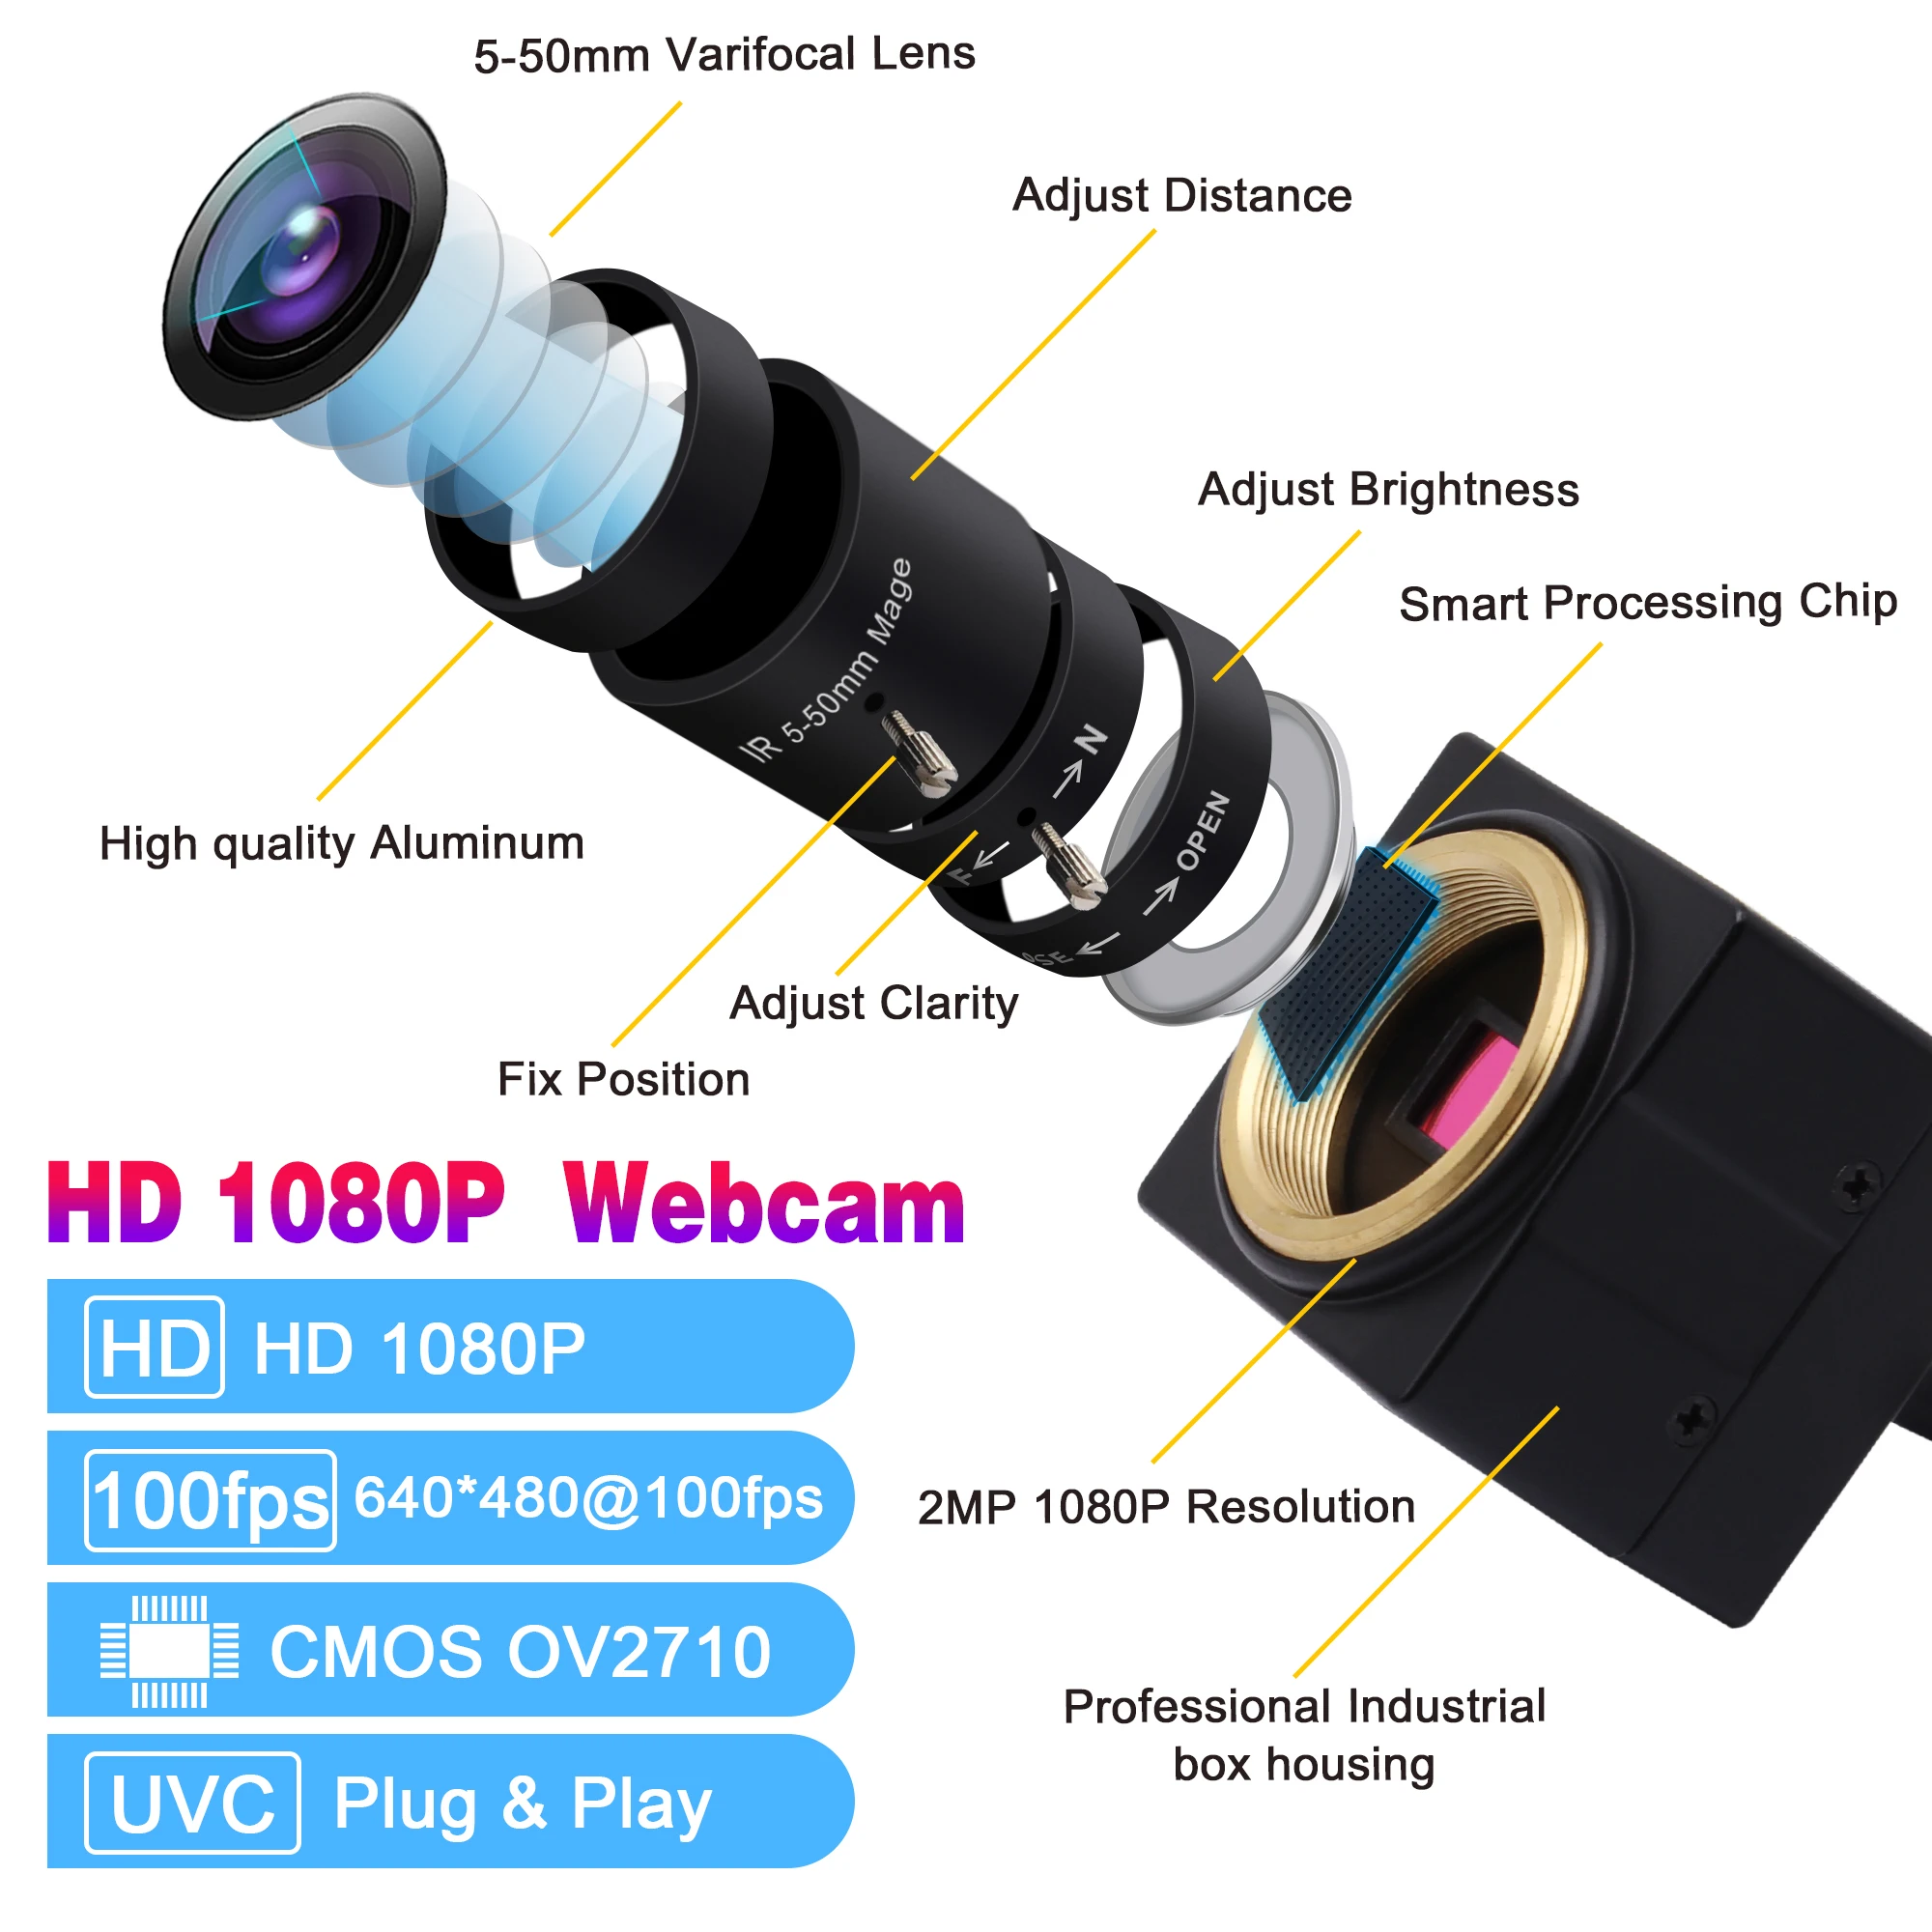 Camera USB 5-50mm Varifocal Lens Webcam High Speed VGA 100fps Full HD 1080P  USB Camera with Aluminum Mini Case Webcam Support OpenCV for Android